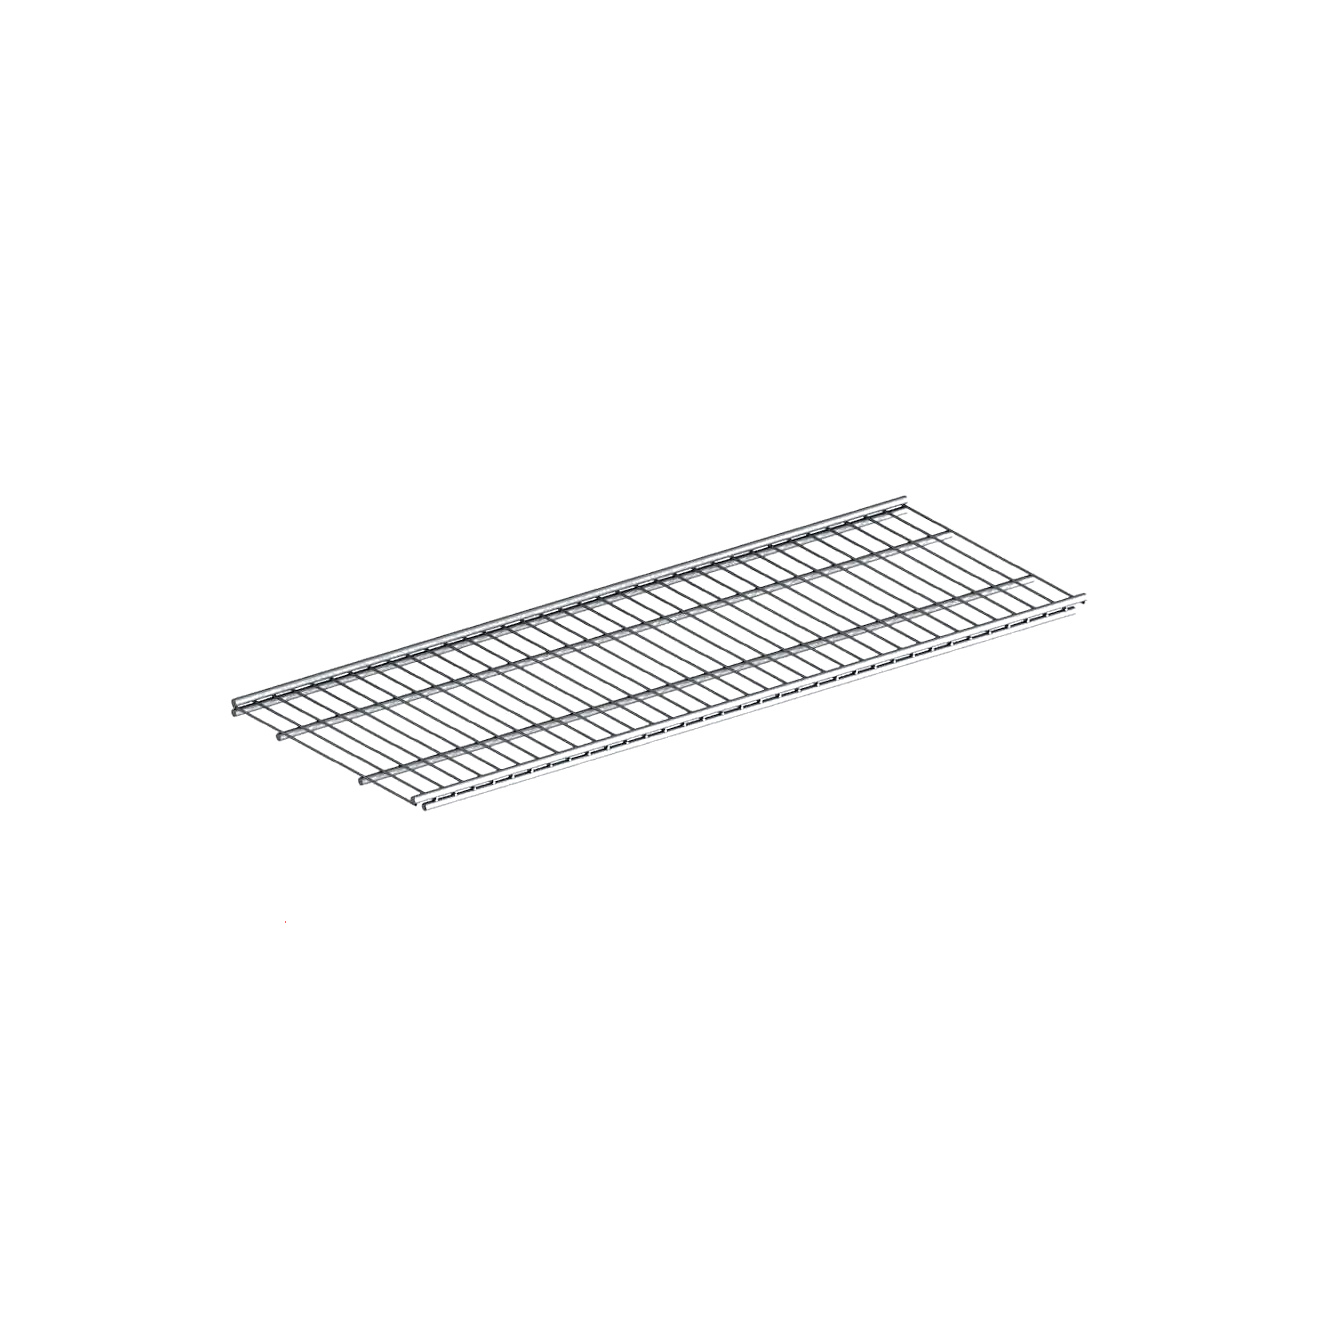 Sovella grid shelf 900x400mm, white - Storit